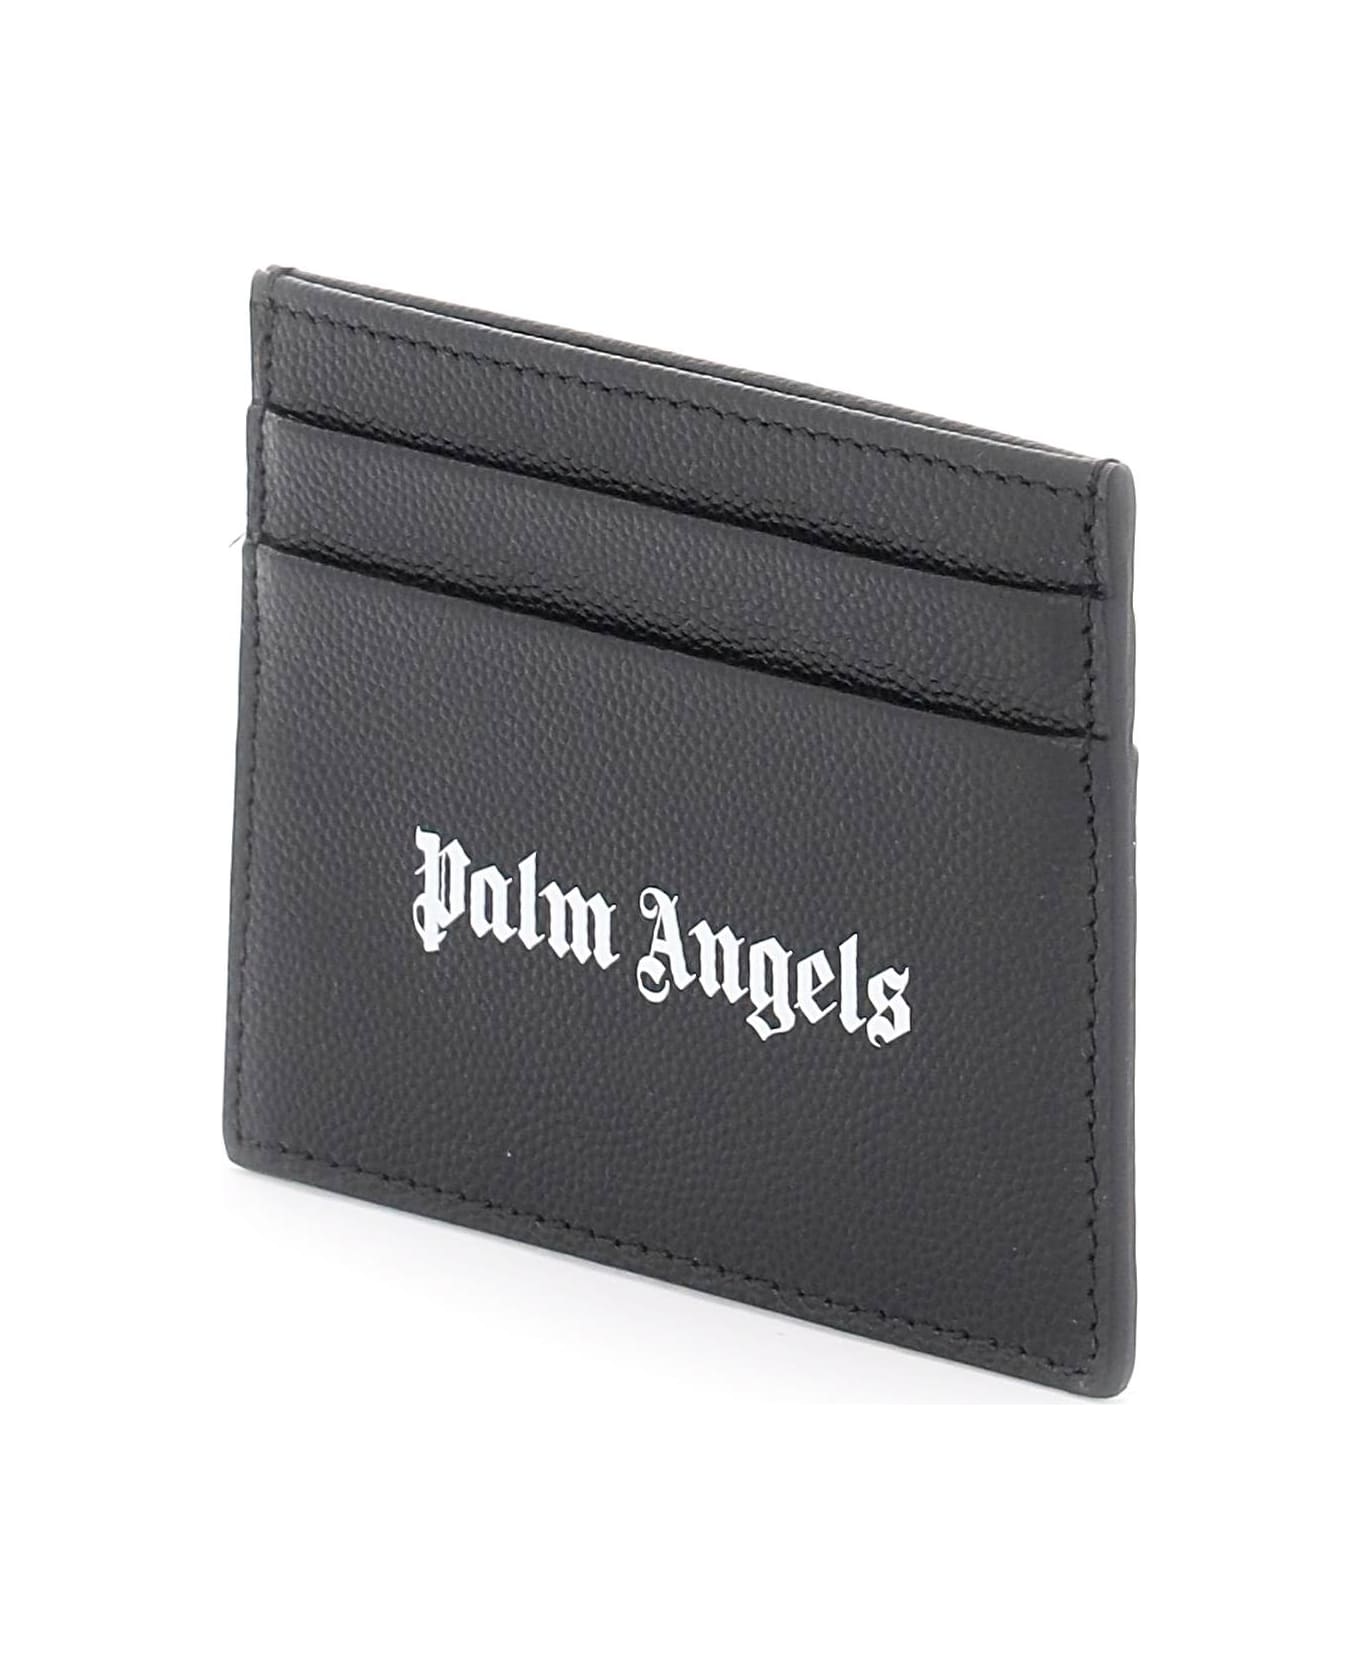 Palm Angels Logo Cardholder - Black White 財布